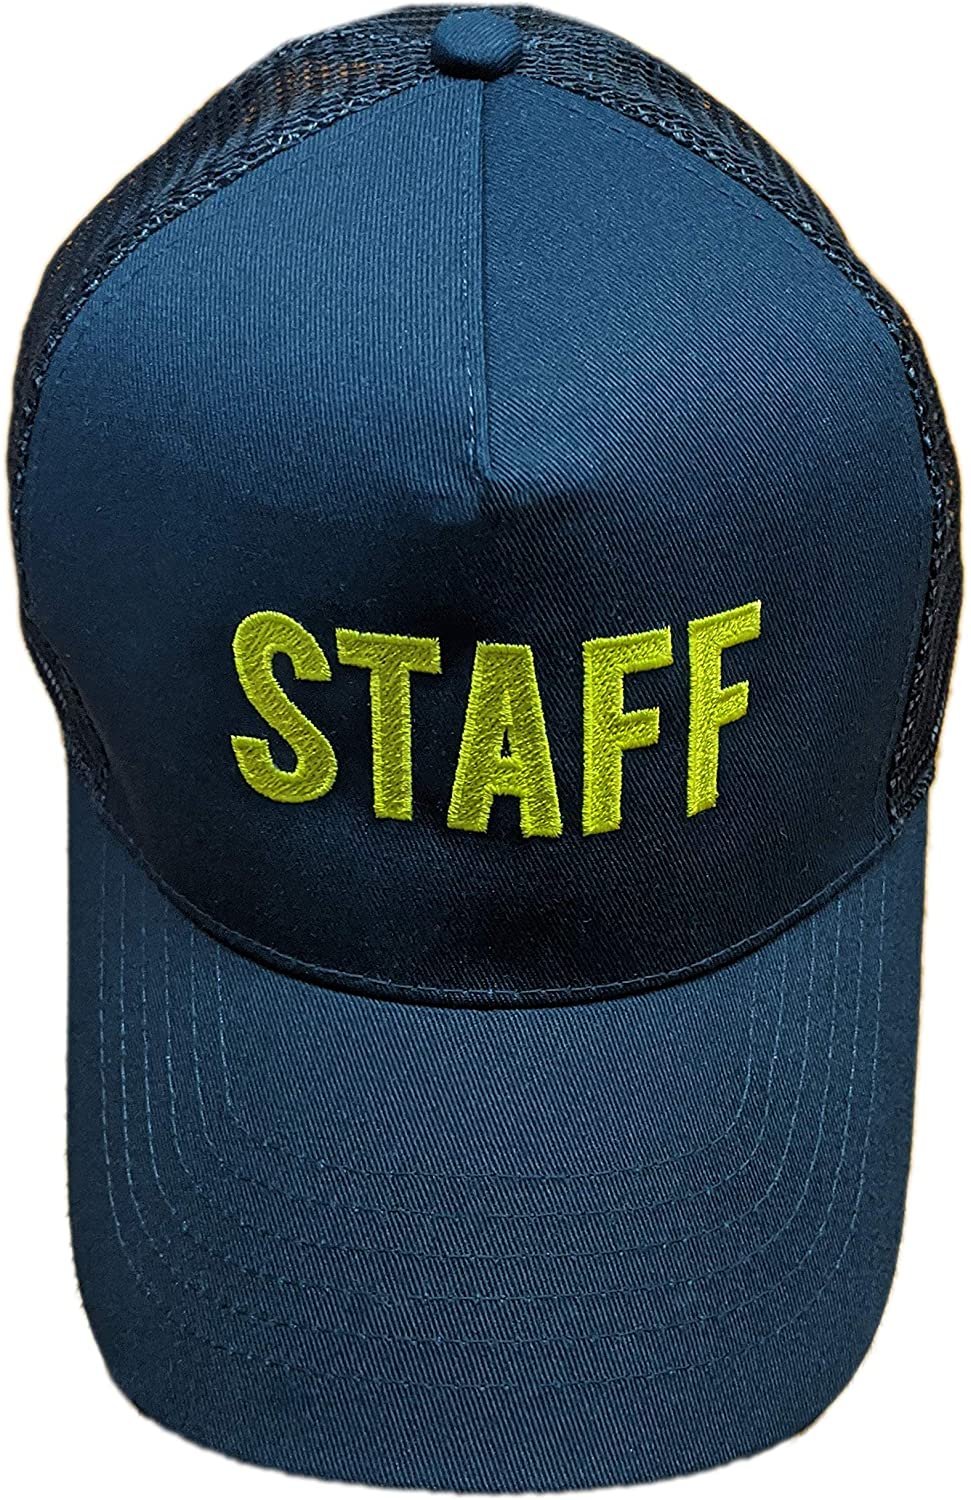 Staff Baseball Hat Embroidered Mesh Trucker Cap (Navy & Neon)